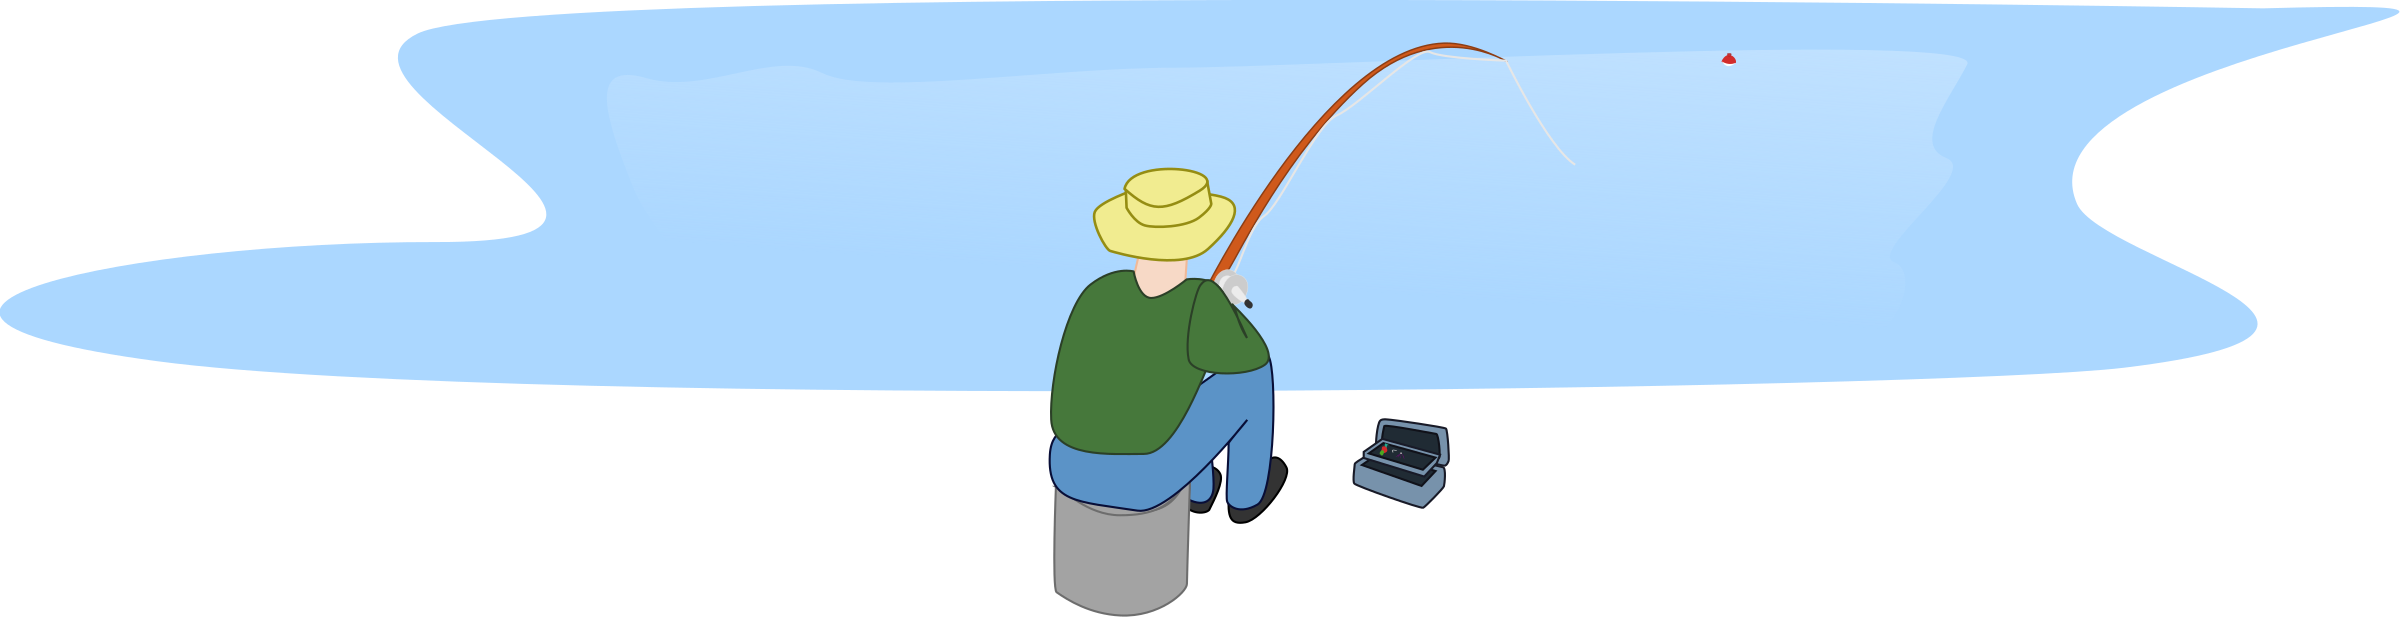 Fisherman fishing sitting by a lake SVG Clip arts